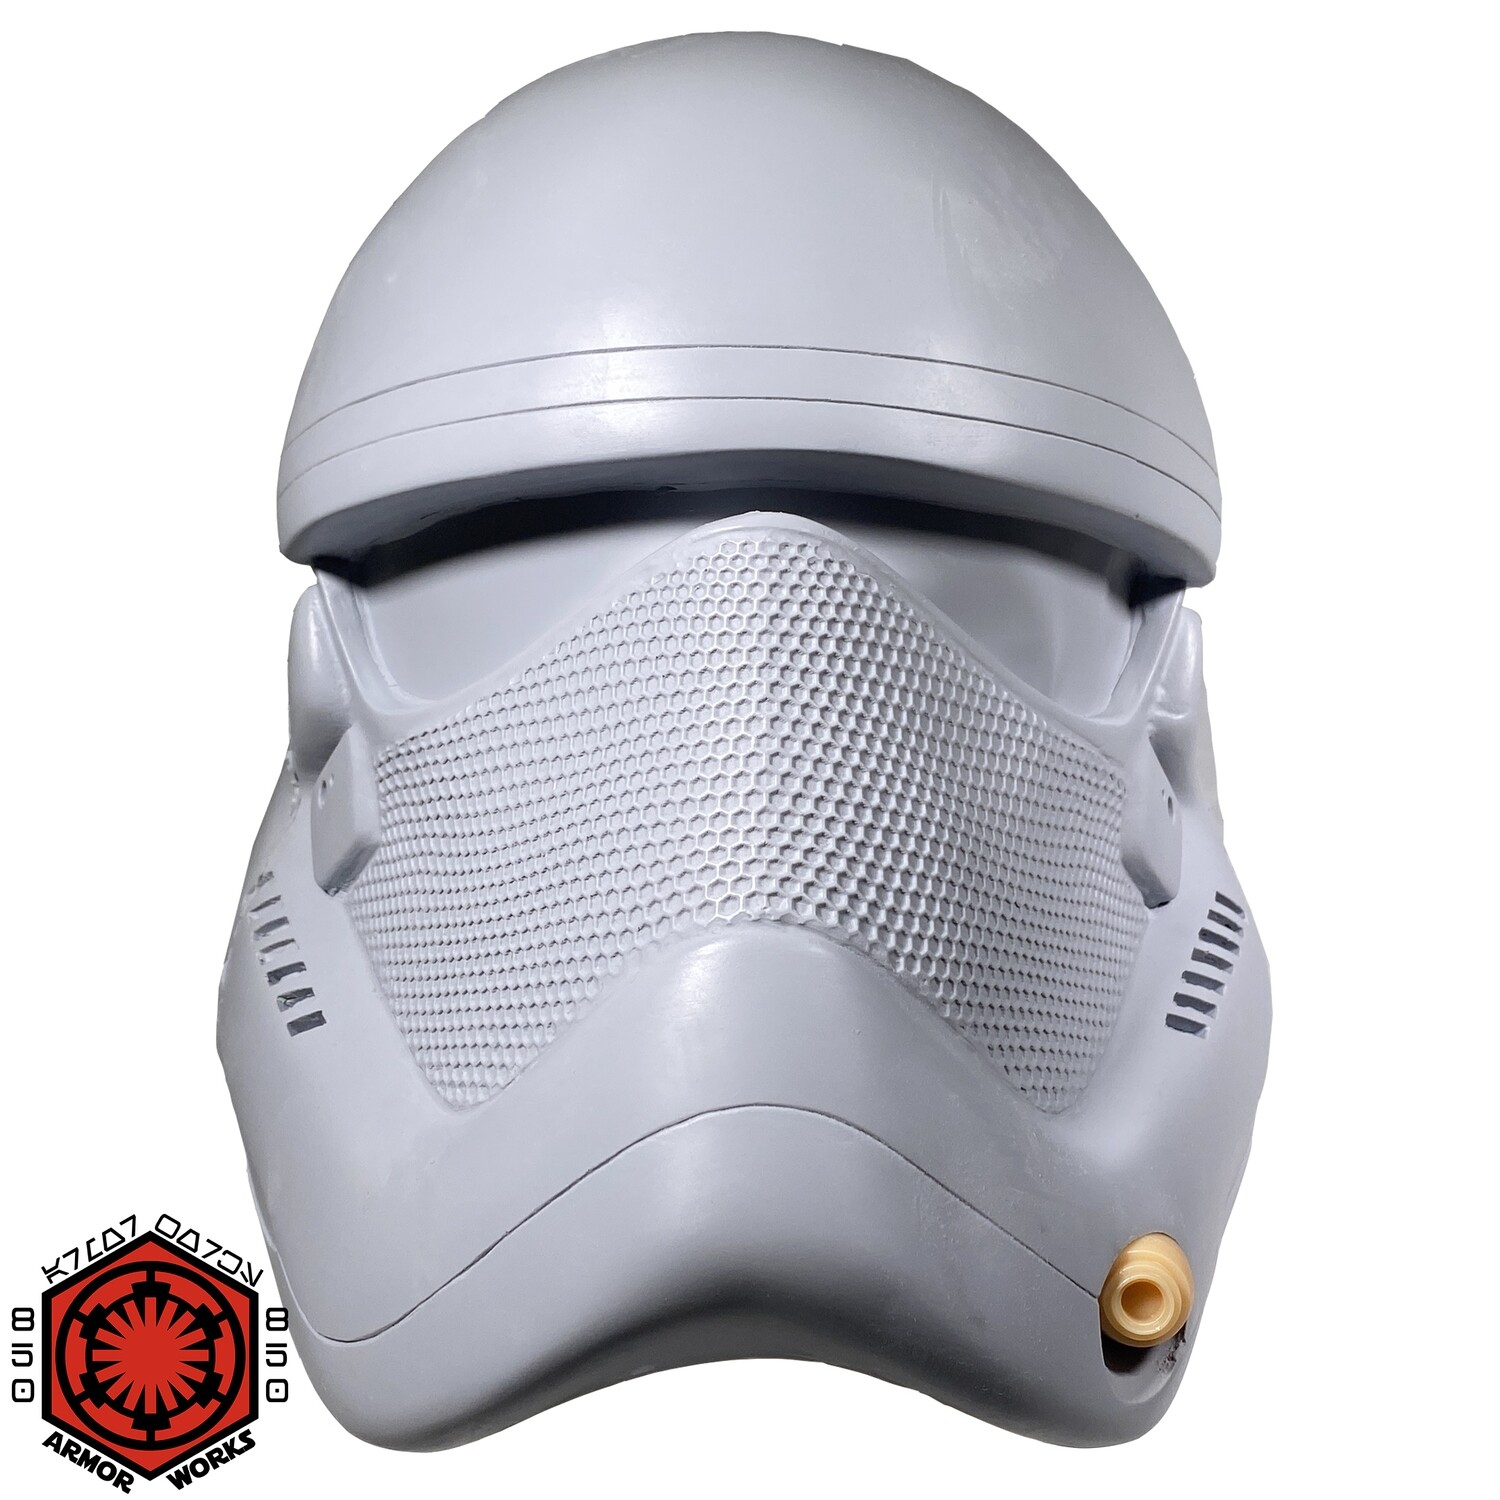 FOTK First Order Stormtrooper Helmet Kit